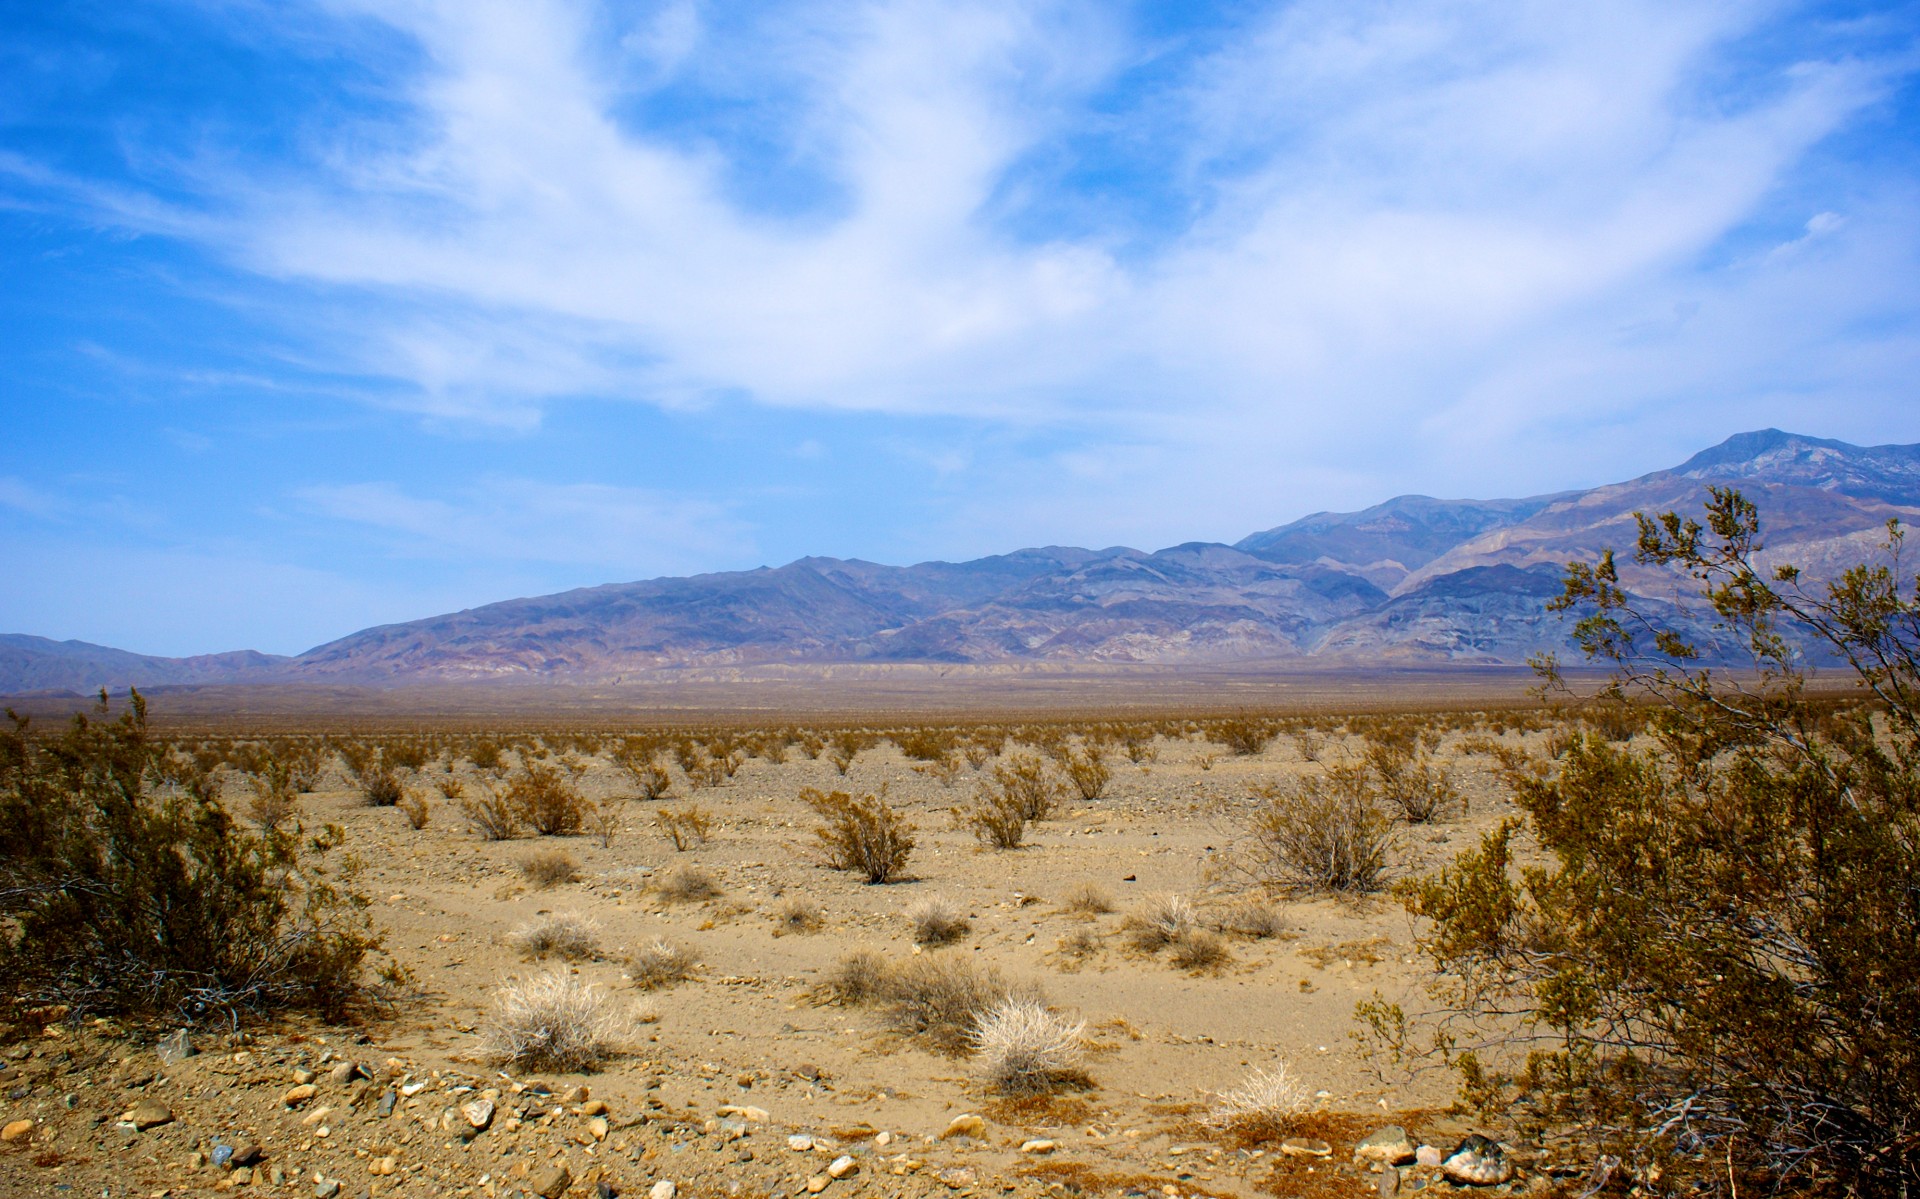 Desolation Of Mojave Desert